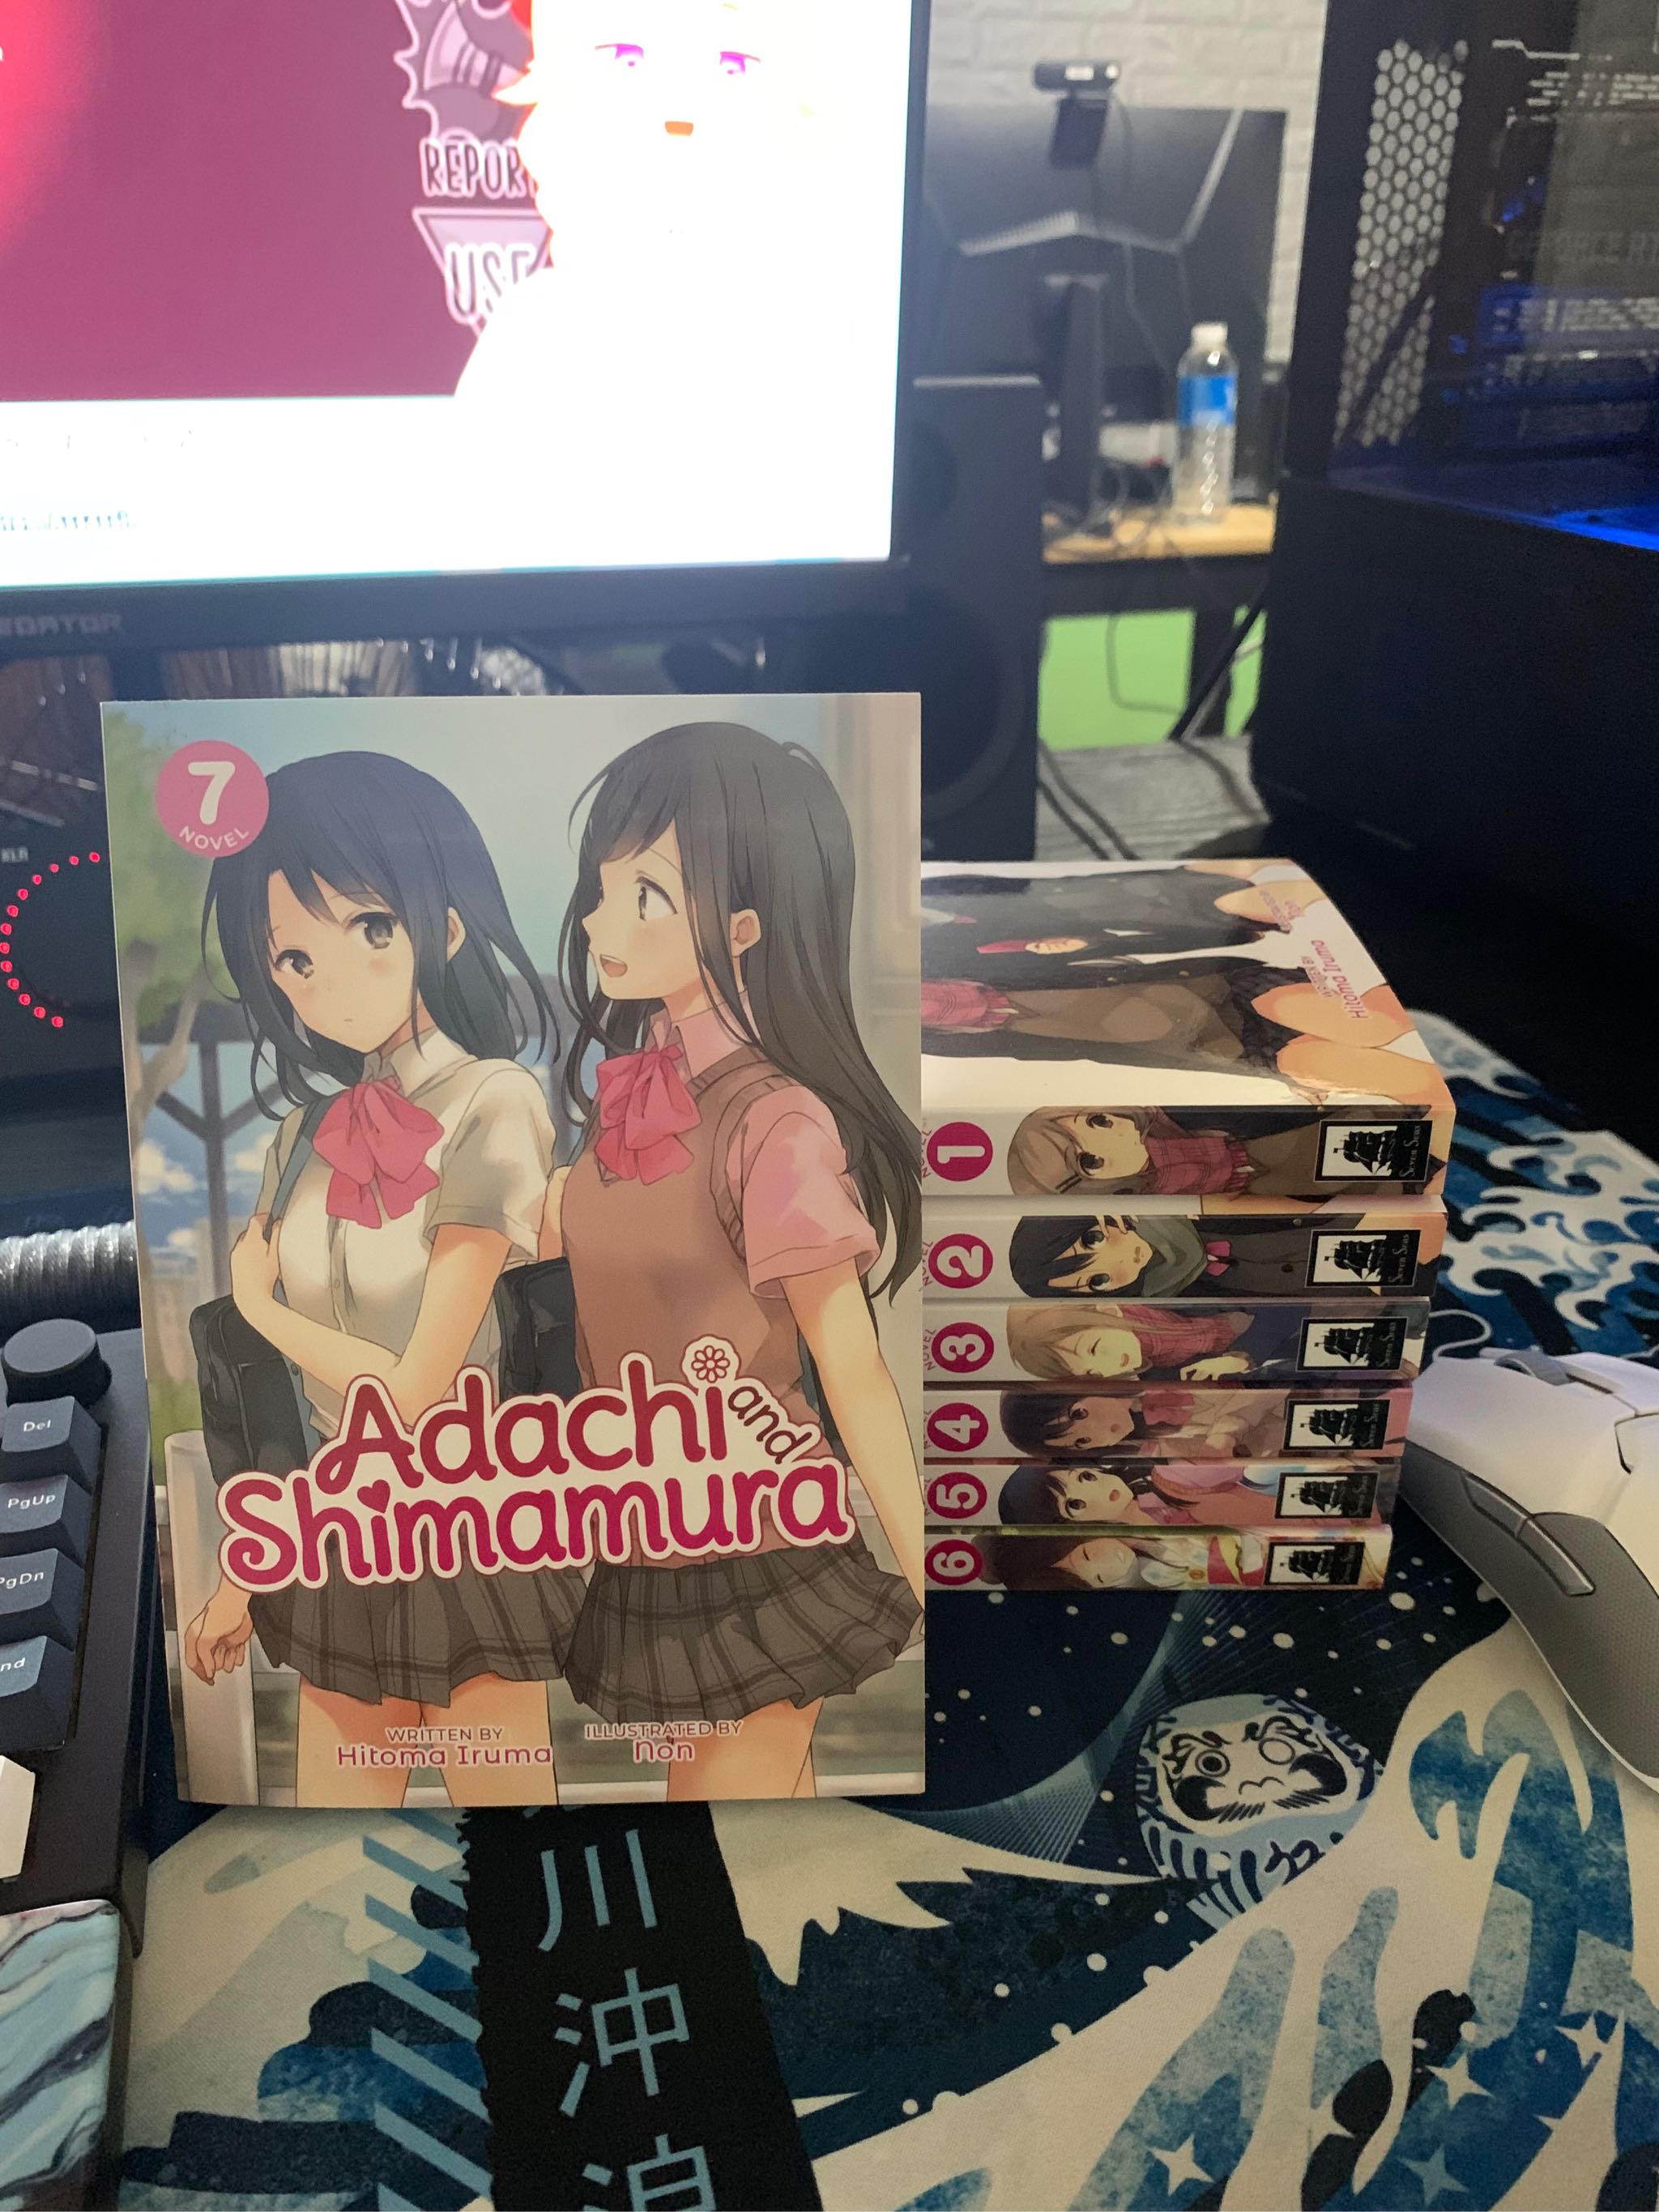 Seven Seas Entertainment on X: ADACHI AND SHIMAMURA (LIGHT NOVEL), Vol. 2, Hitoma Iruma and Non, #yuri slice-of-life, romance, becoming an anime  soon, $9.99 (digital)